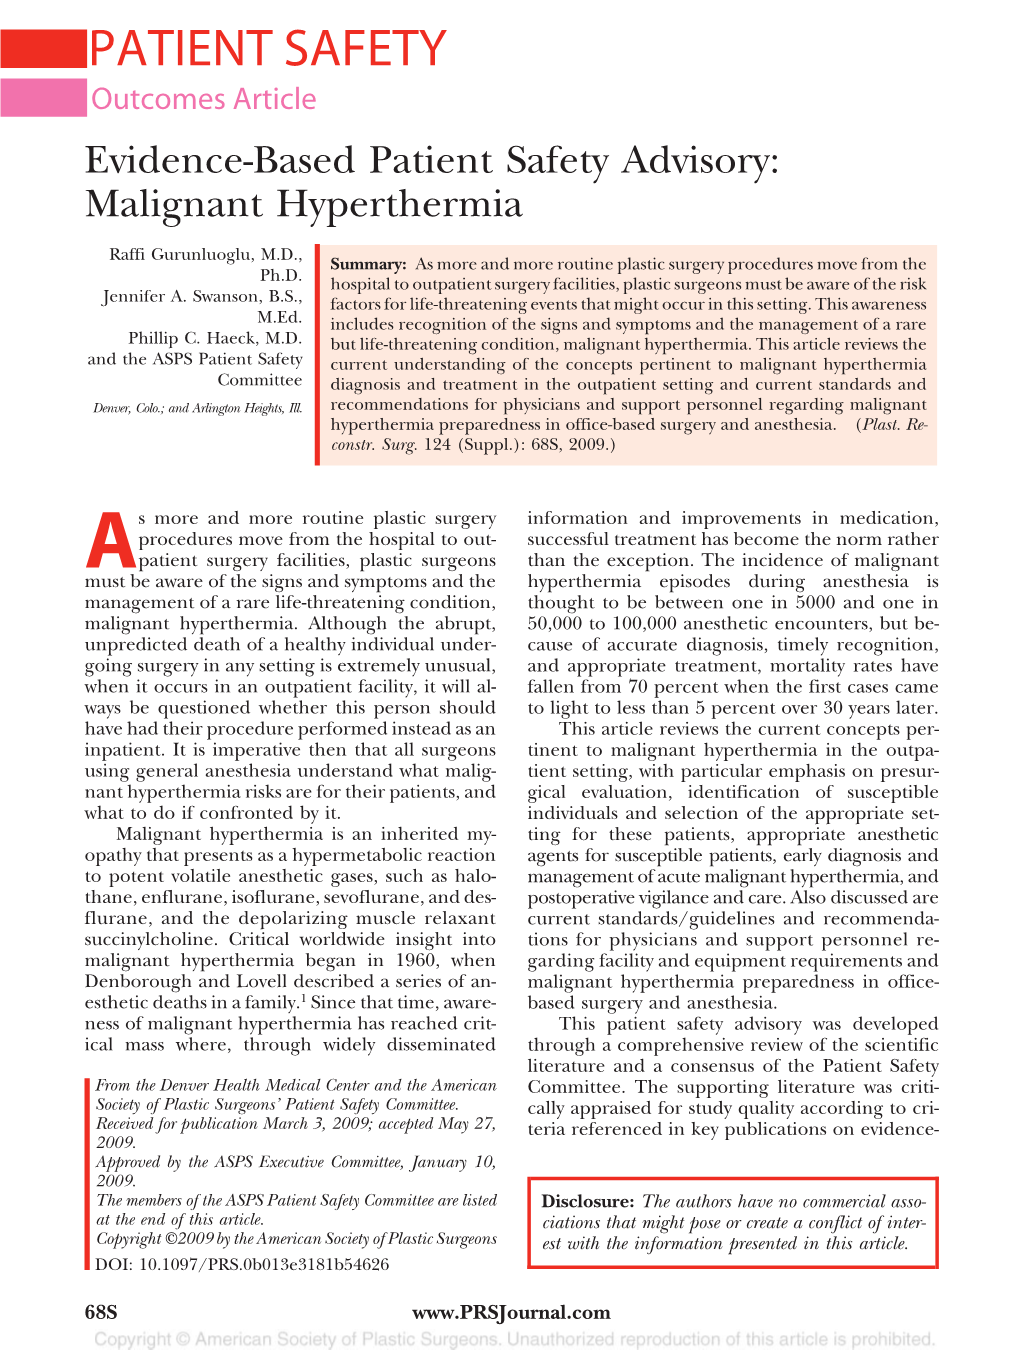 Evidence-Based Patient Safety Advisory: Malignant Hyperthermia